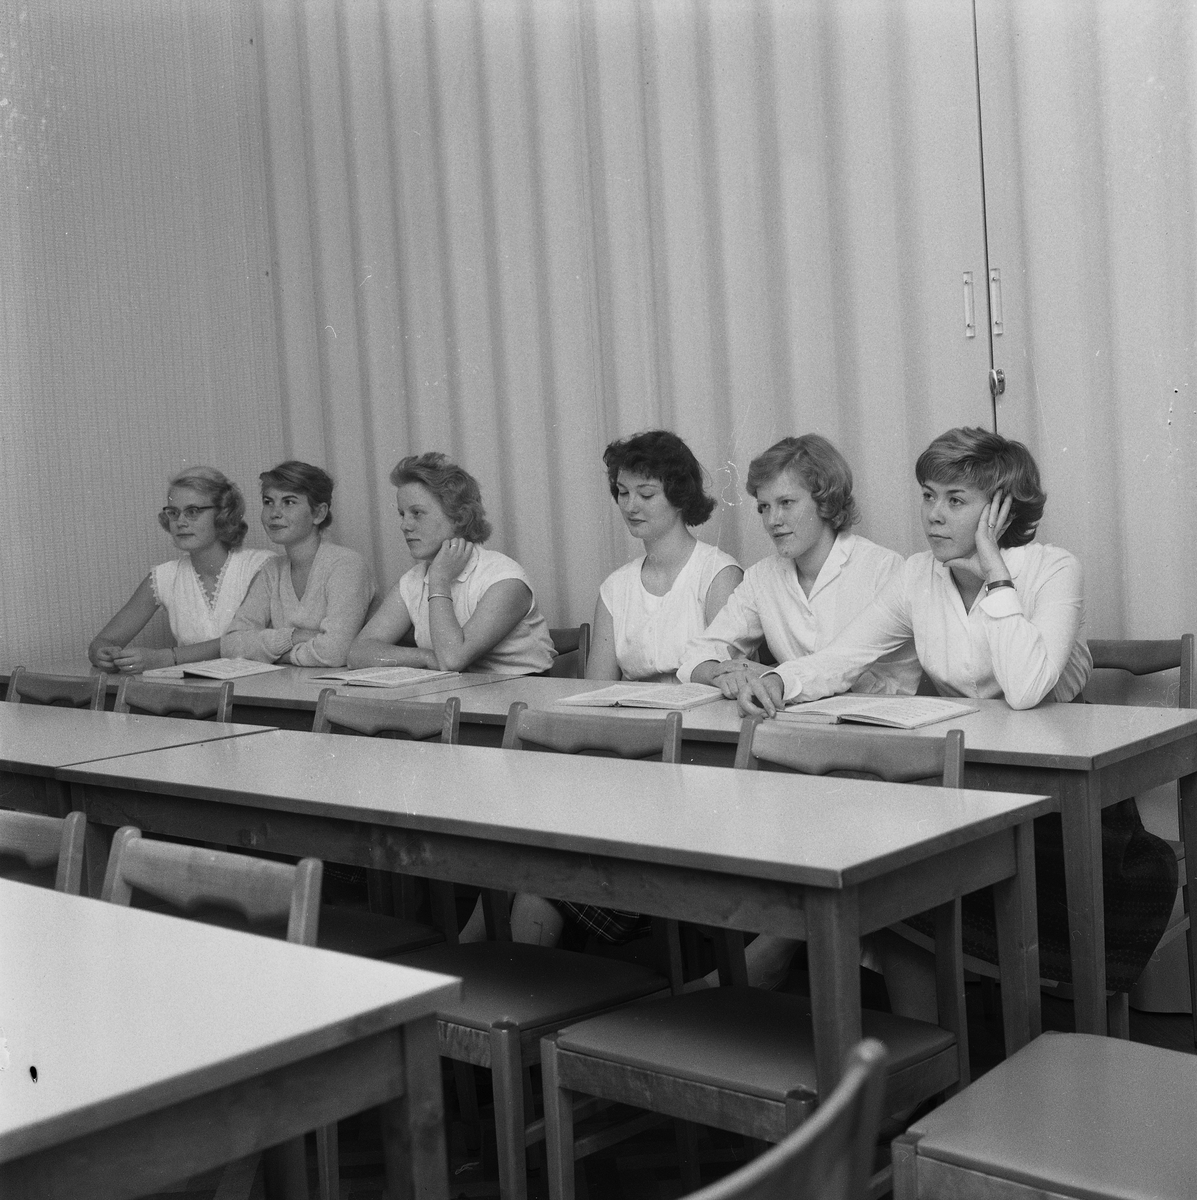 Husmoderskolan utvidgas.
3 oktober 1958.